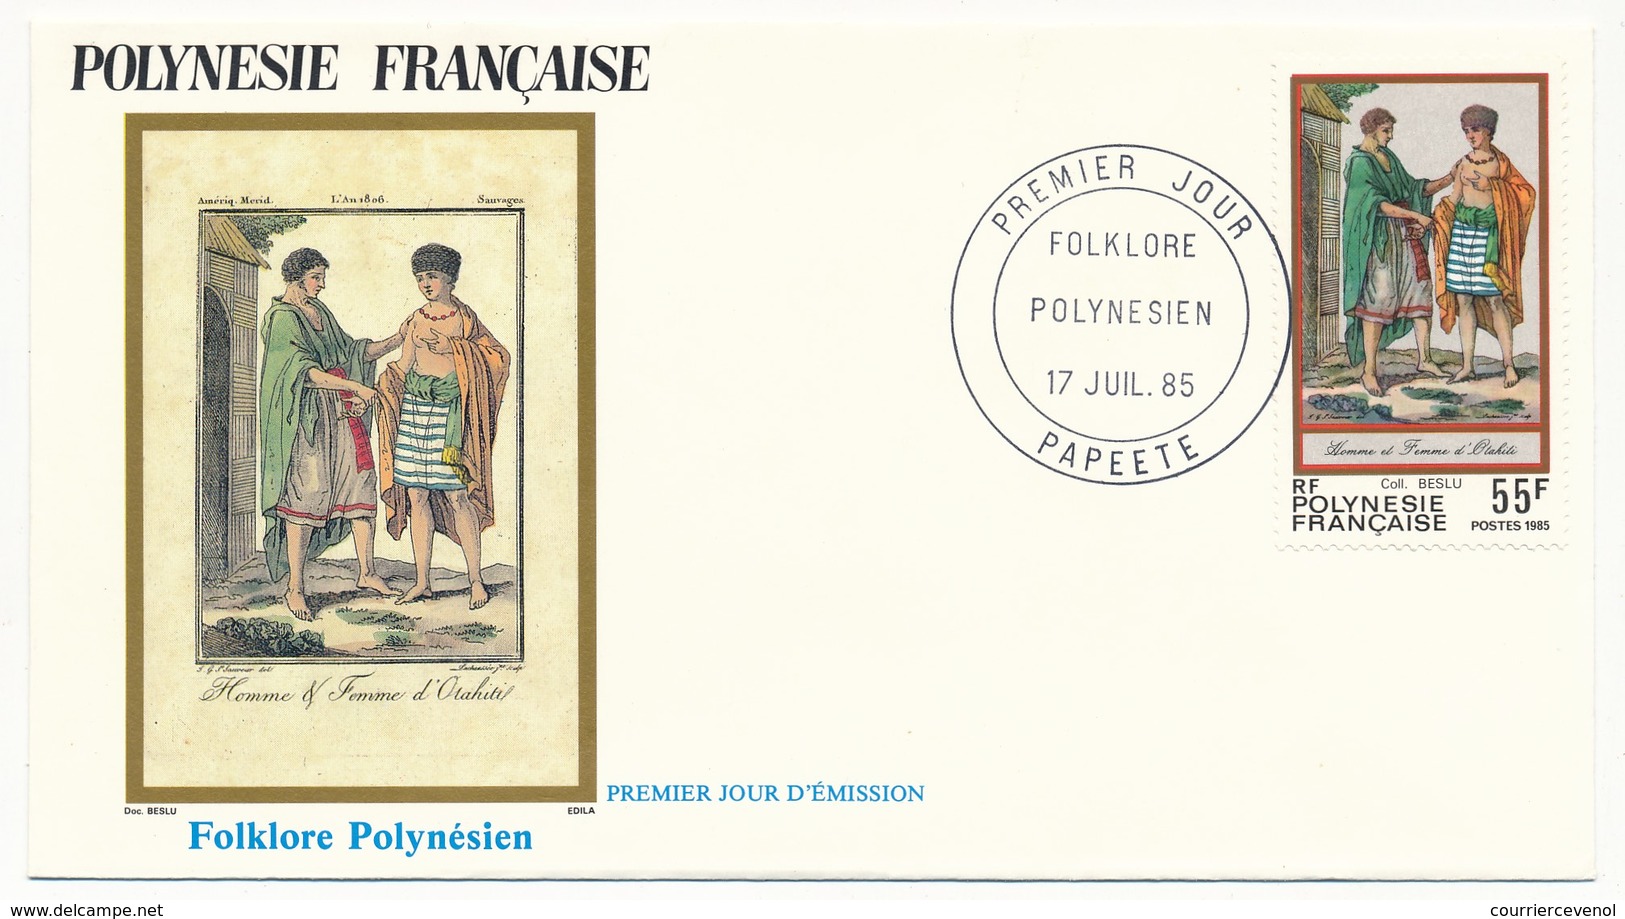 POLYNESIE FRANCAISE - 3 FDC - Folklore Polynésien - 17 Juillet 1985 - Papeete - FDC